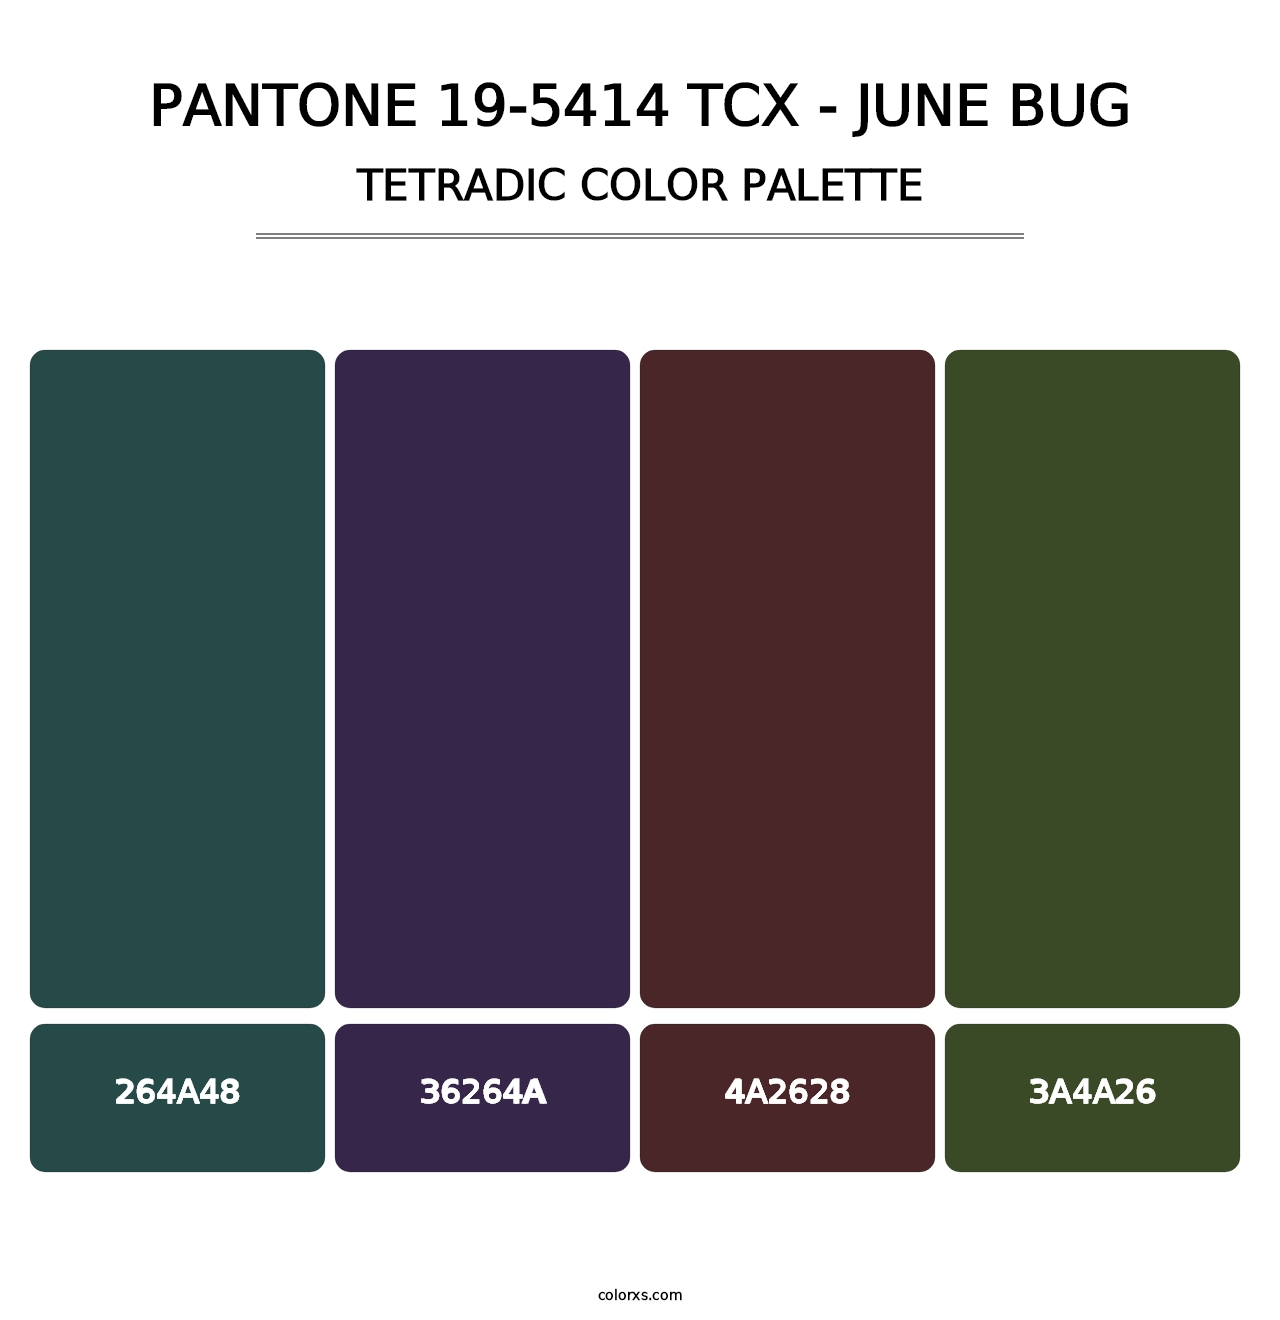 PANTONE 19-5414 TCX - June Bug - Tetradic Color Palette